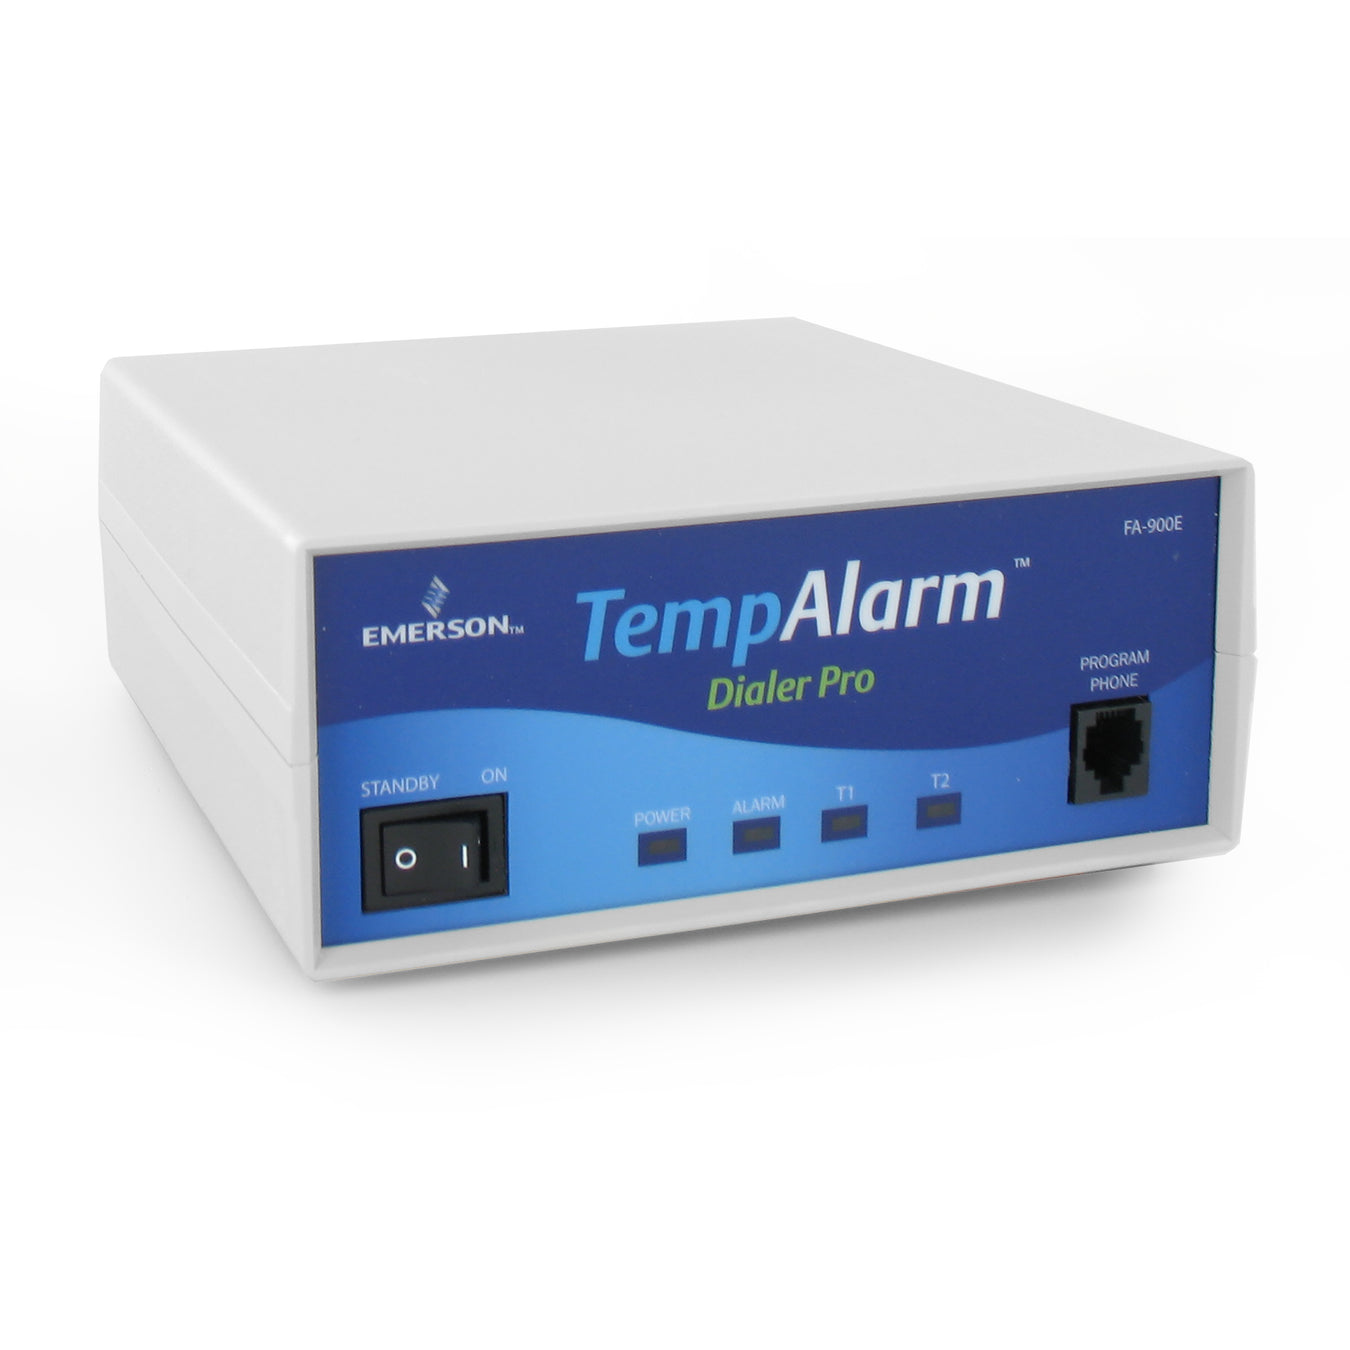 Freeze Alarms and Temperature Alarms